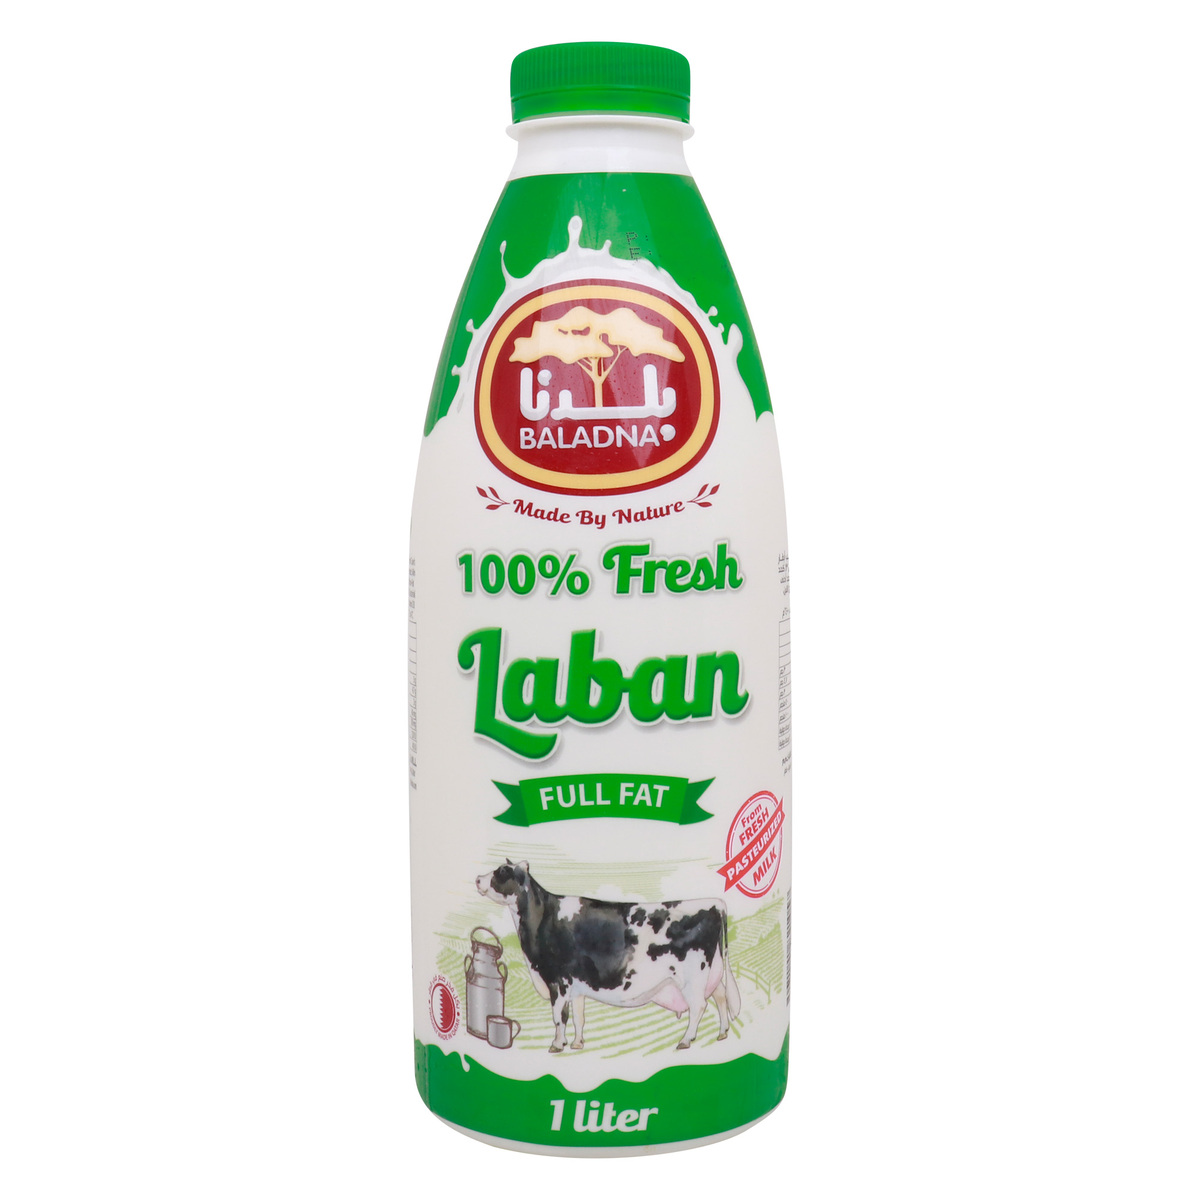 Baladna 100% Fresh Laban Full Fat 1Litre